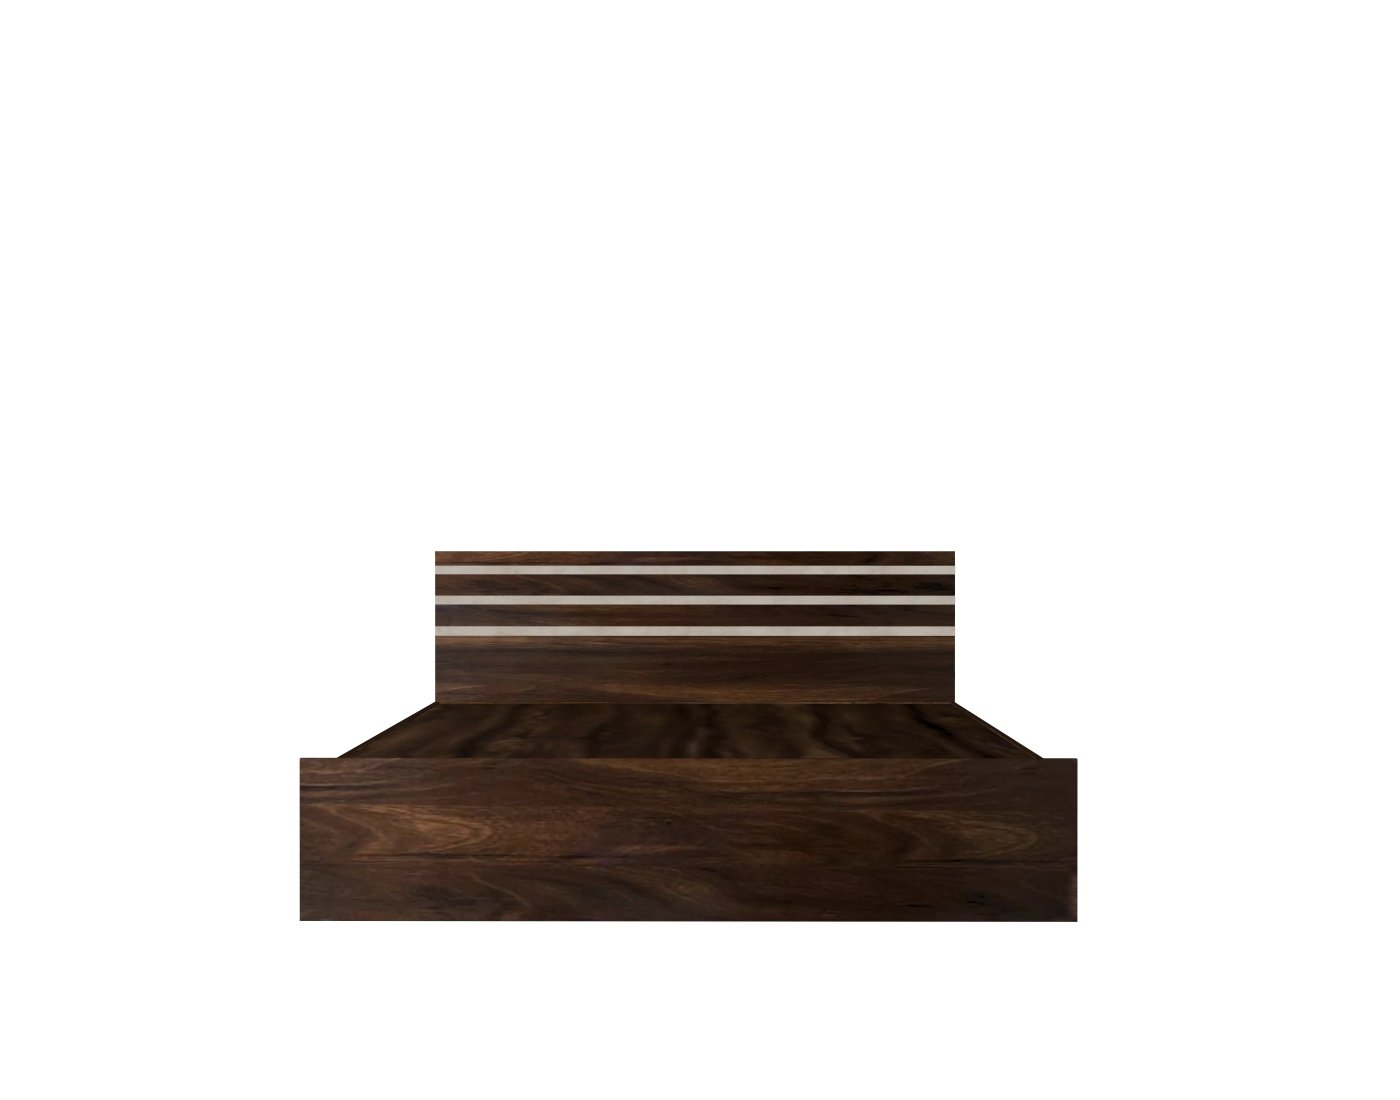 Hyatt Engineered Wood Bed with Box Storage for Bedroom (Brown) - Torque India